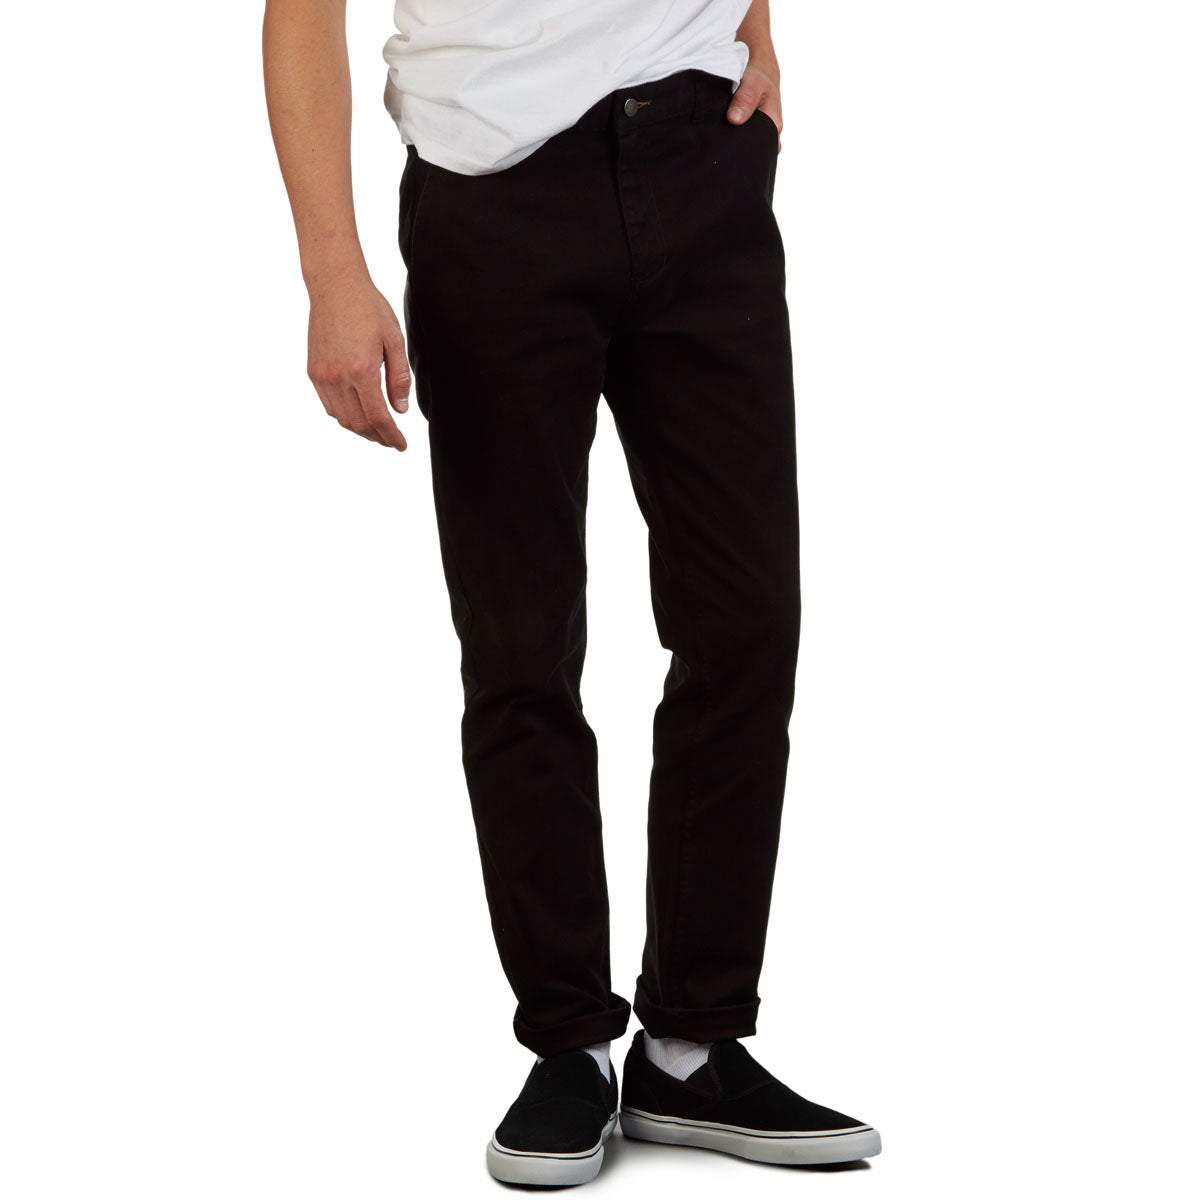 CCS Standard Plus Slim Chino Pants - Black image 4